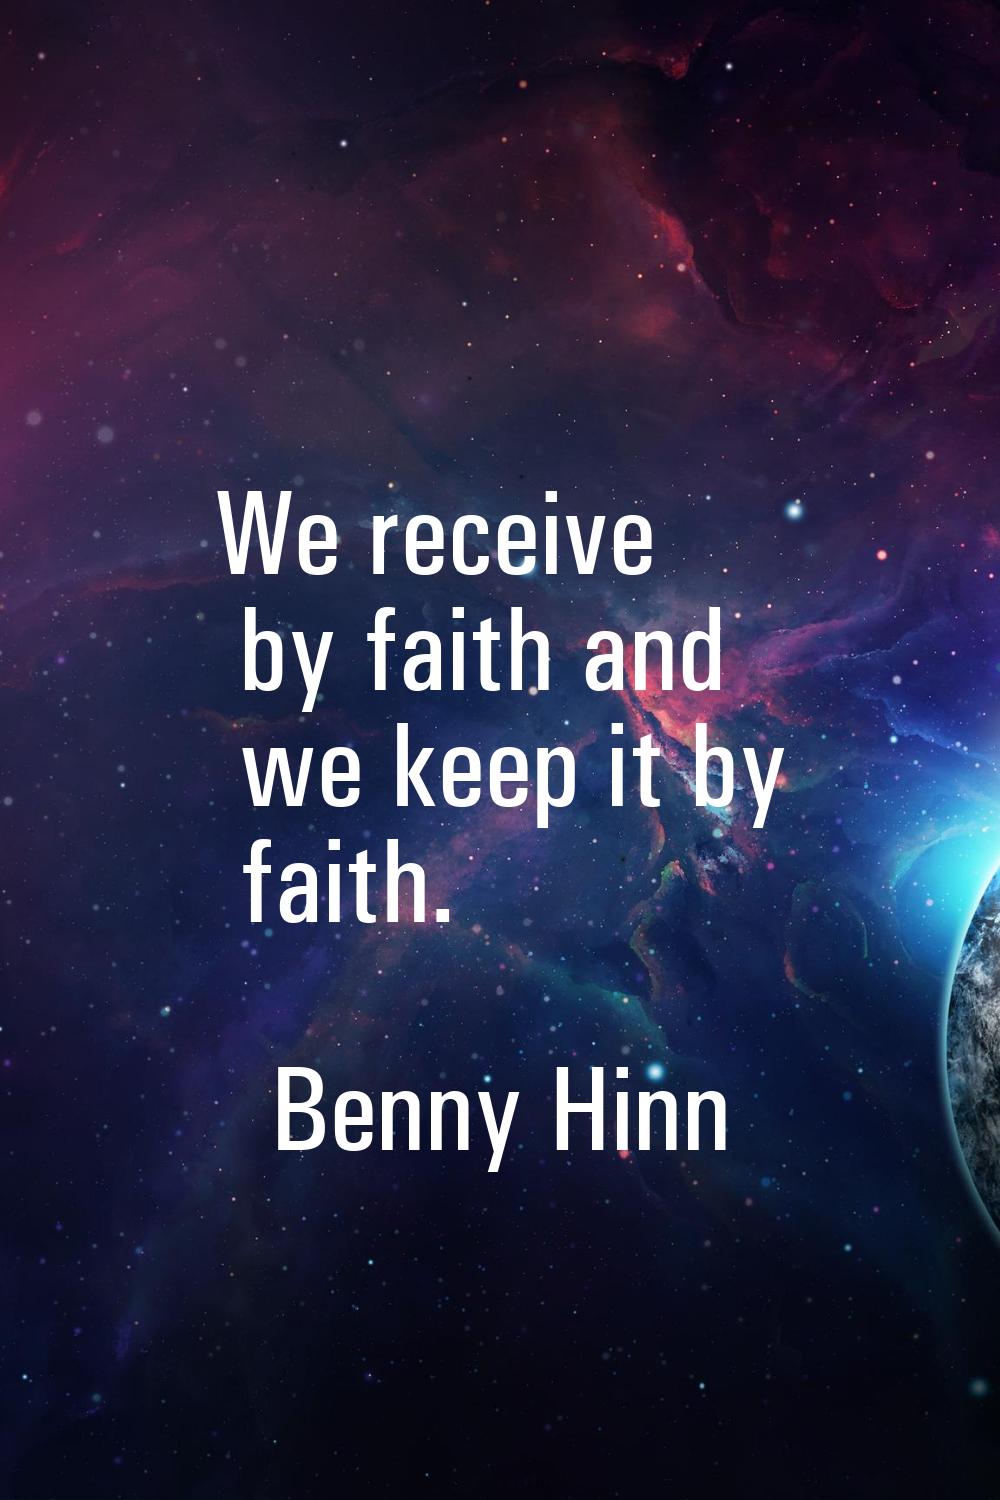 We receive by faith and we keep it by faith.